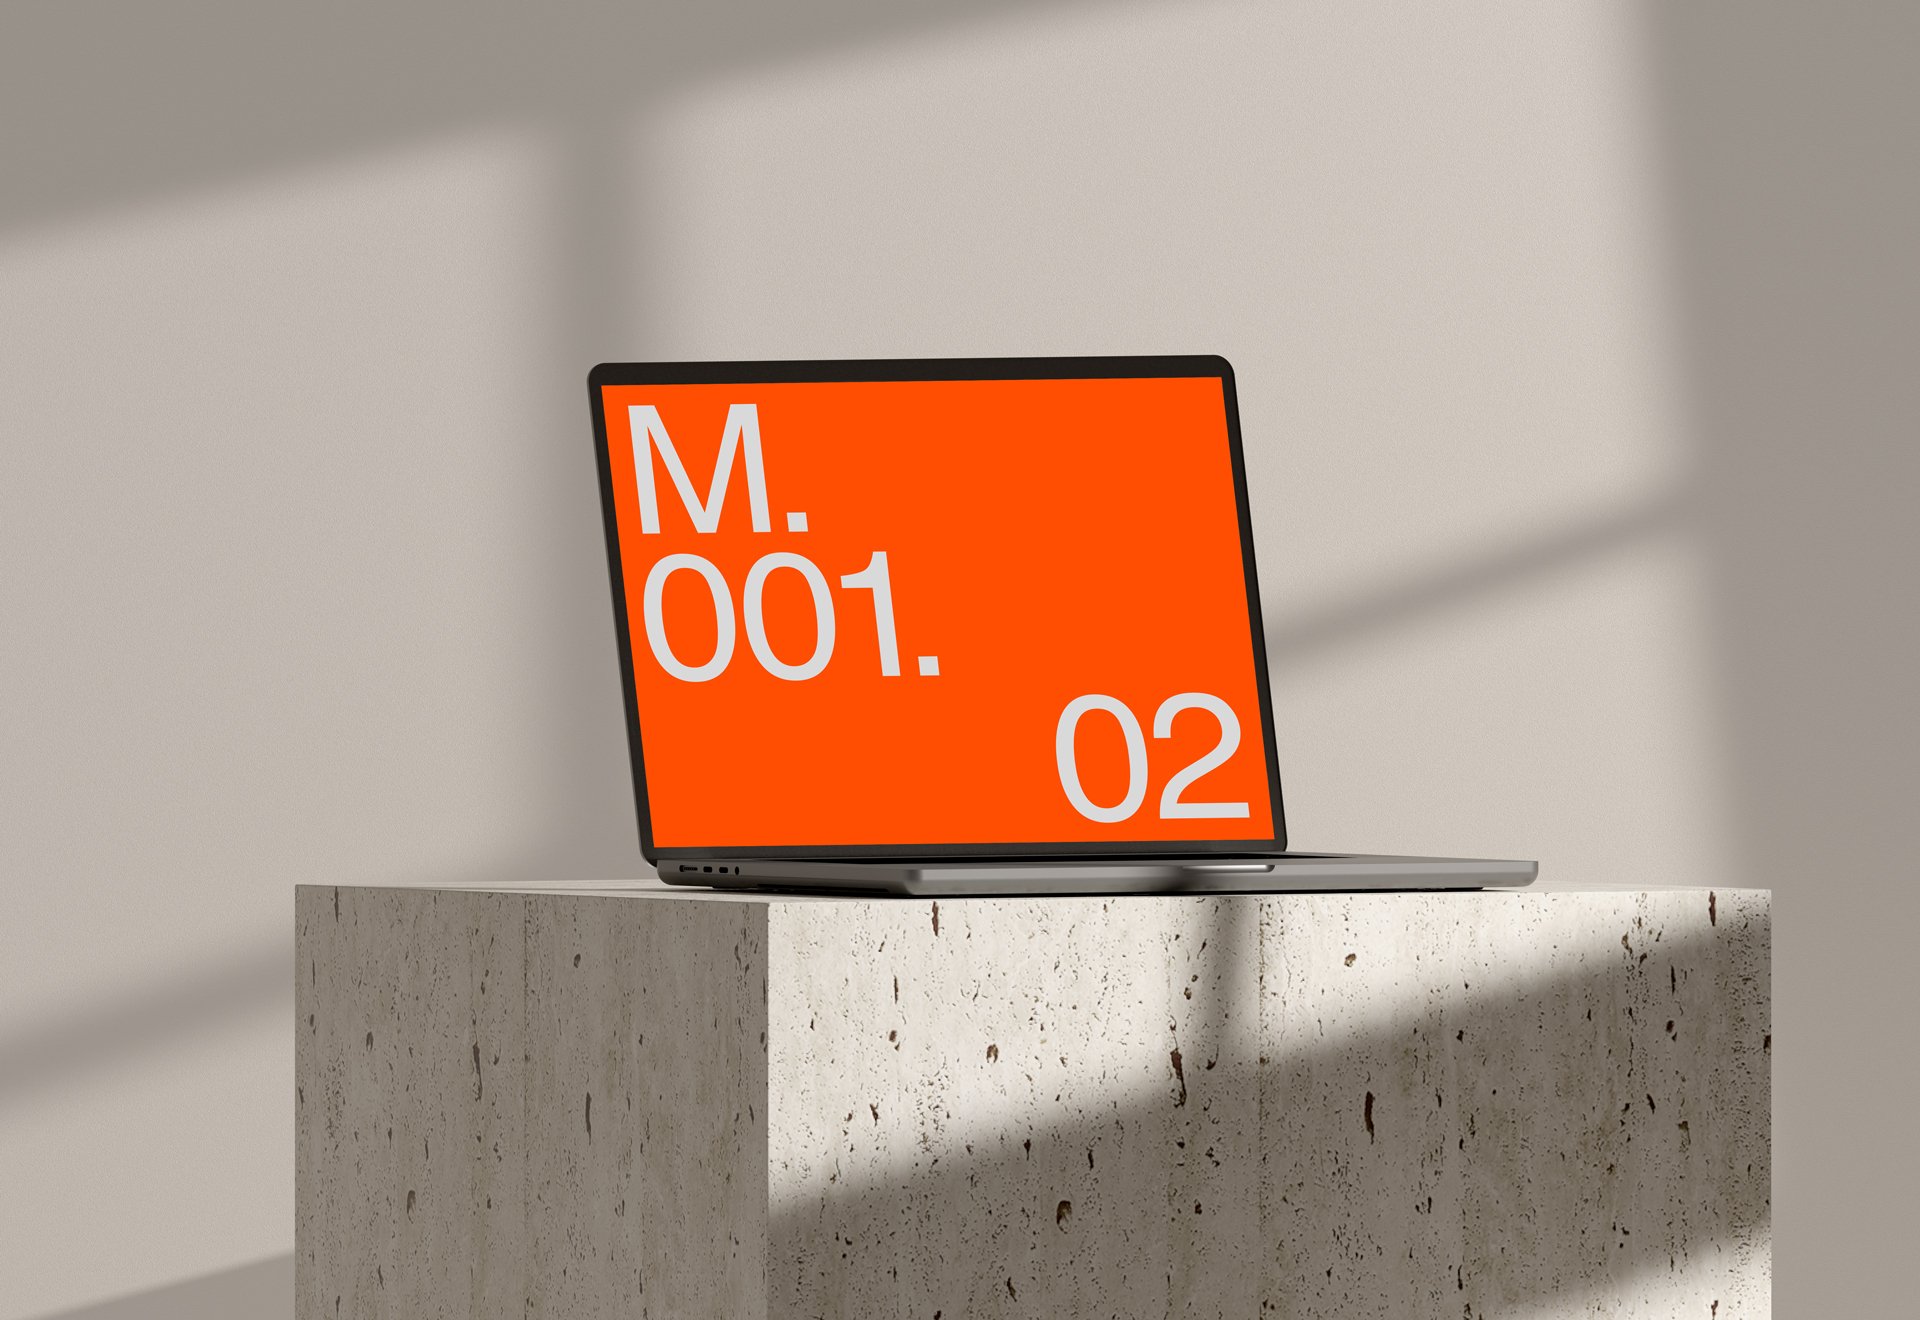 M.001.02 — MacBook Pro Mockup cover image.